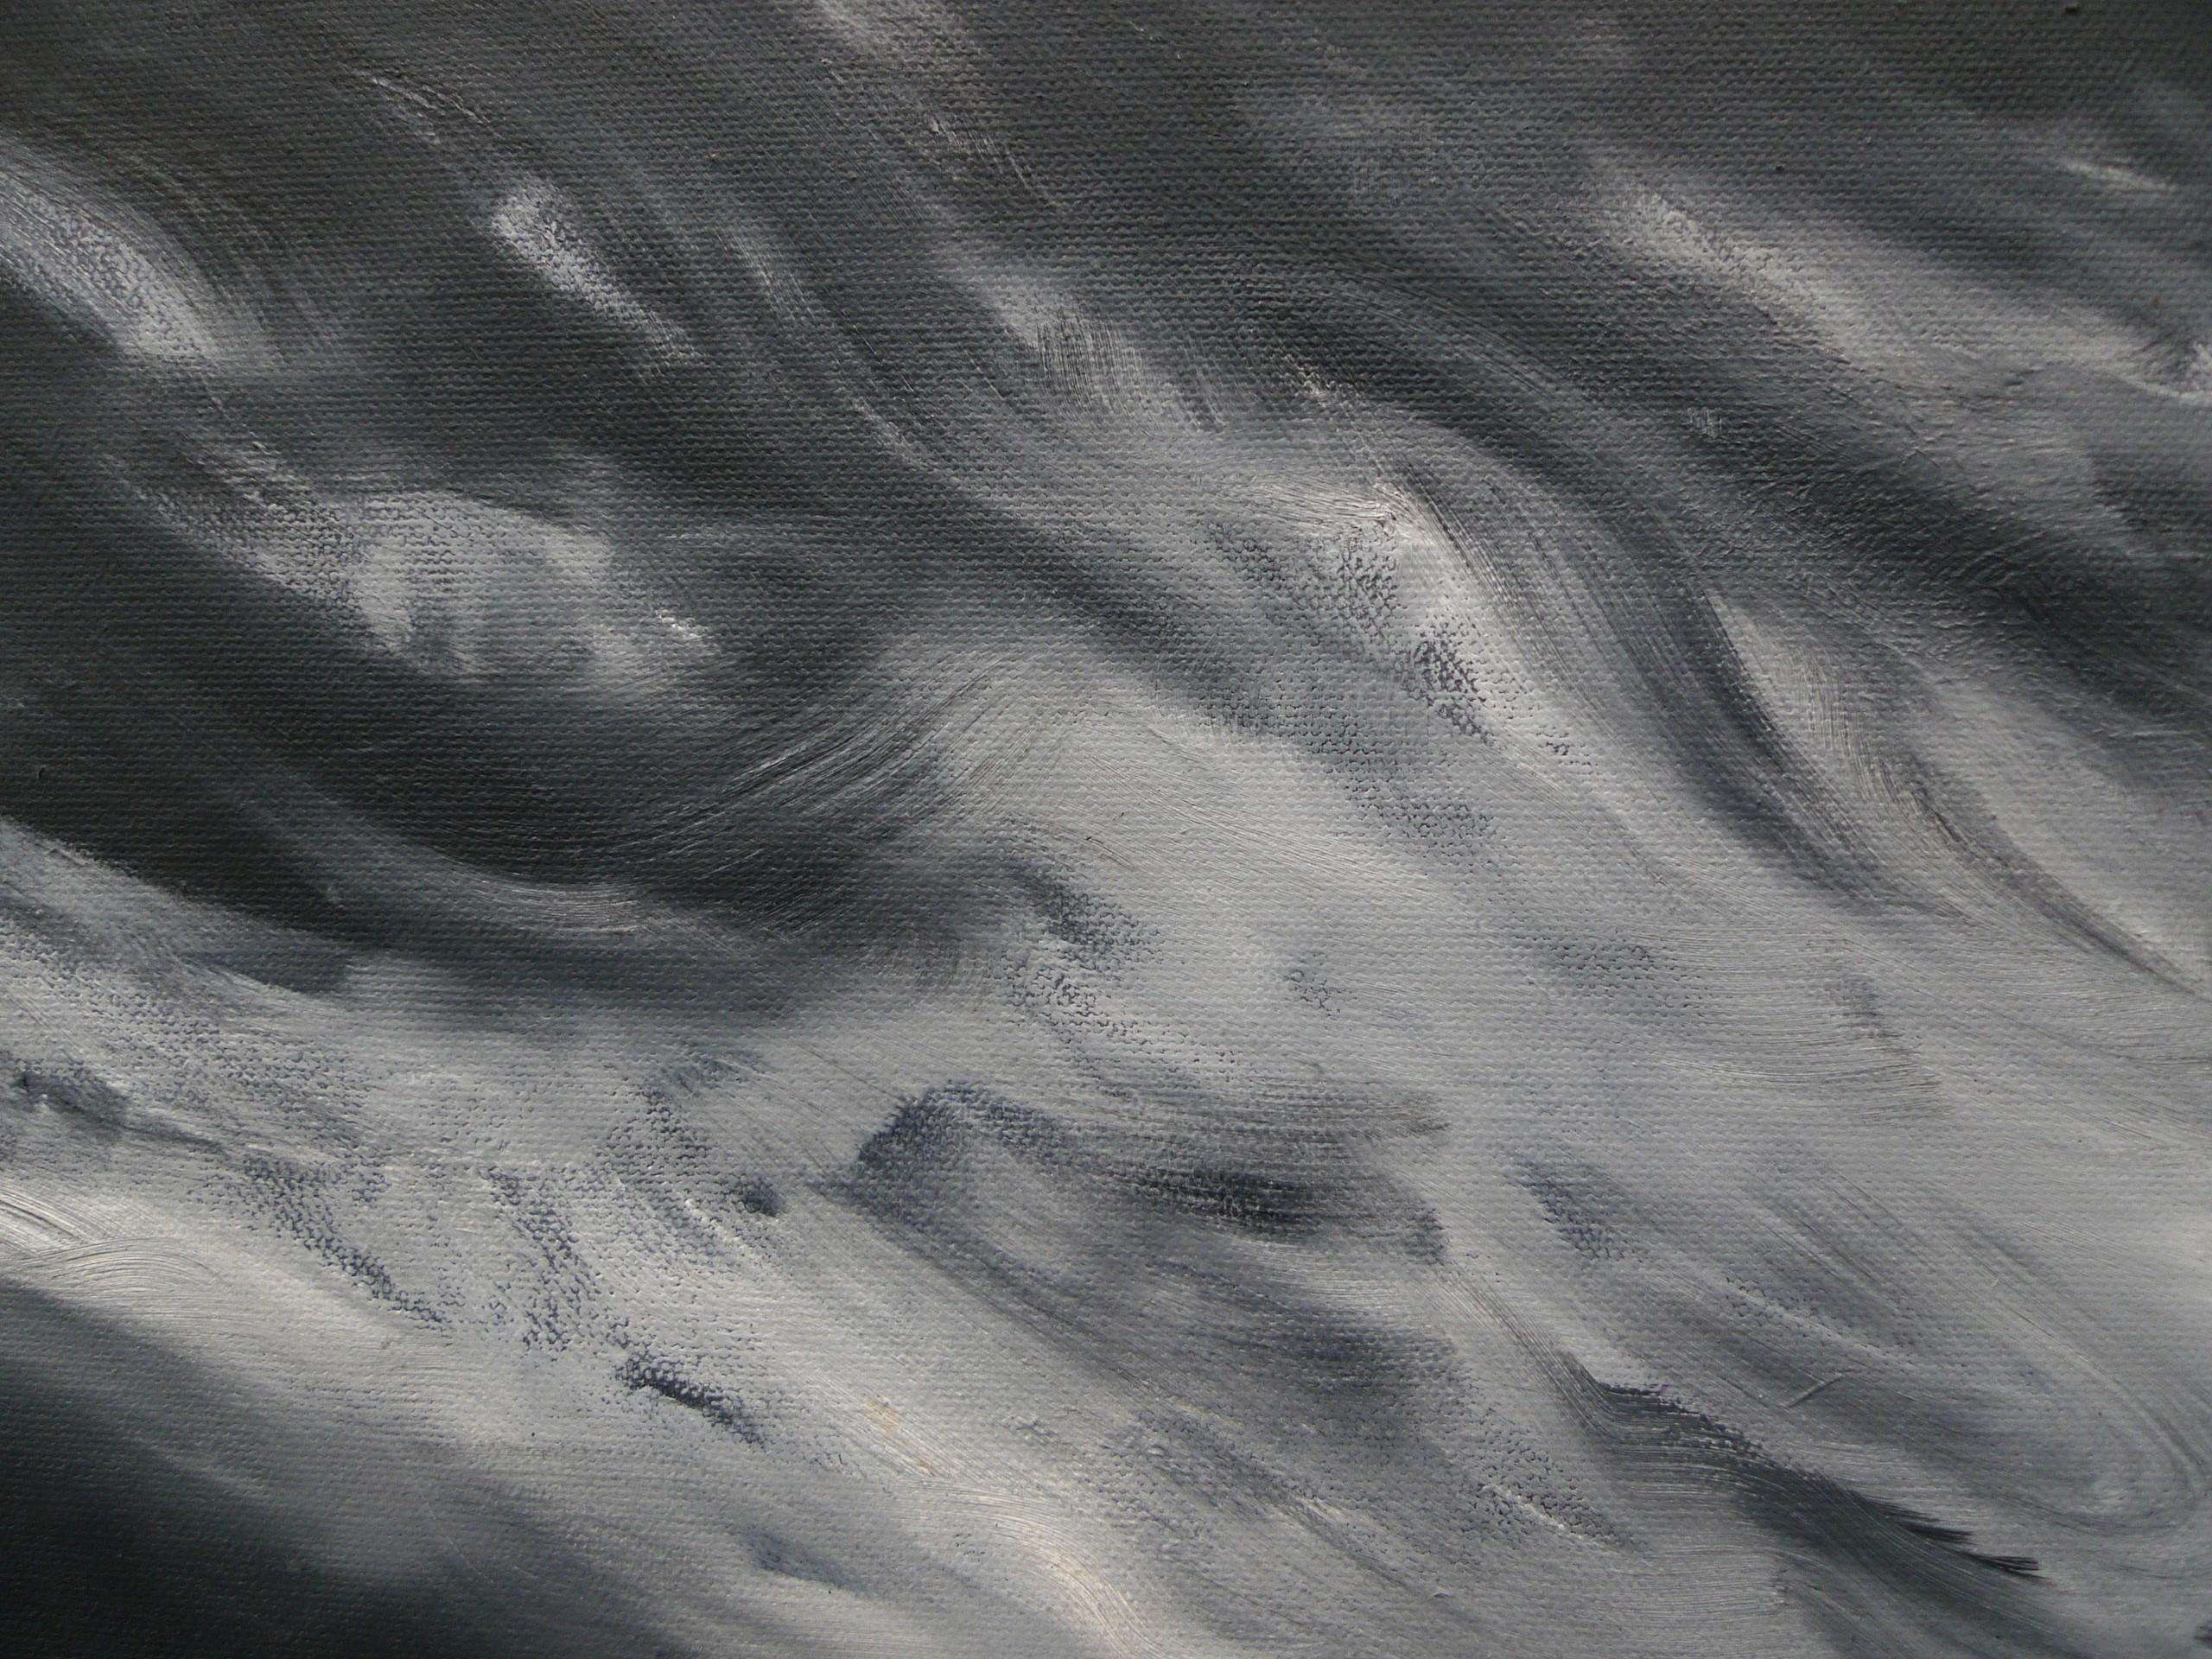 Birth by Franco Salas Borquez - Contemporary oil painting, seascape, wave, dark For Sale 3